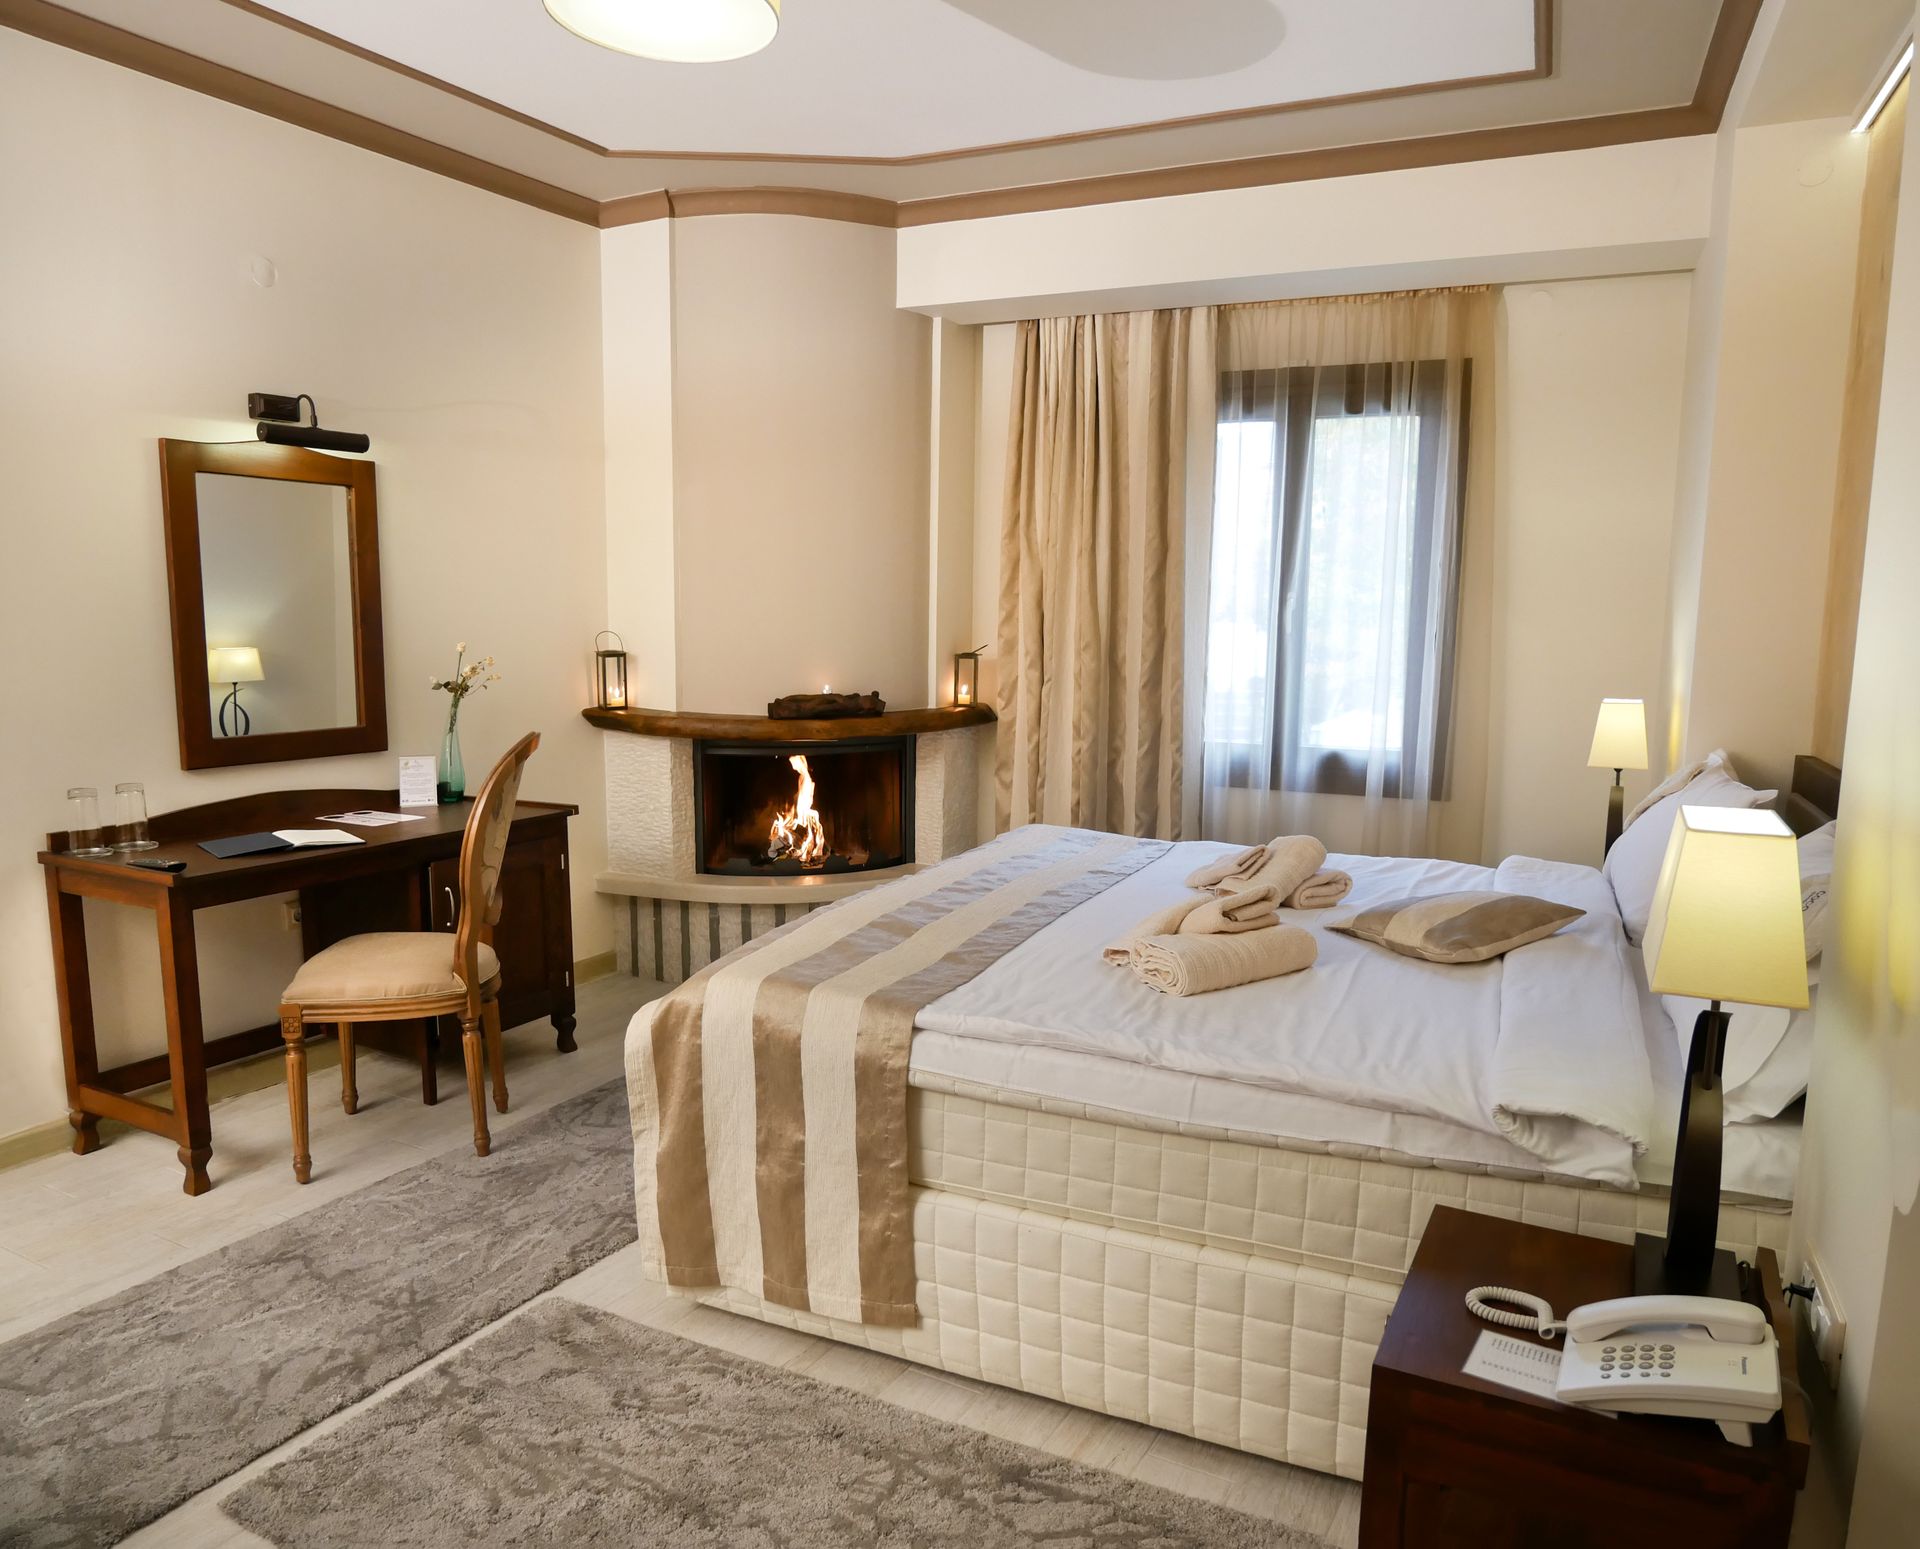 Rodovoli Hotel Konitsa - Κόνιτσα ✦ 4 Ημέρες (3 Διανυκτερεύσεις)